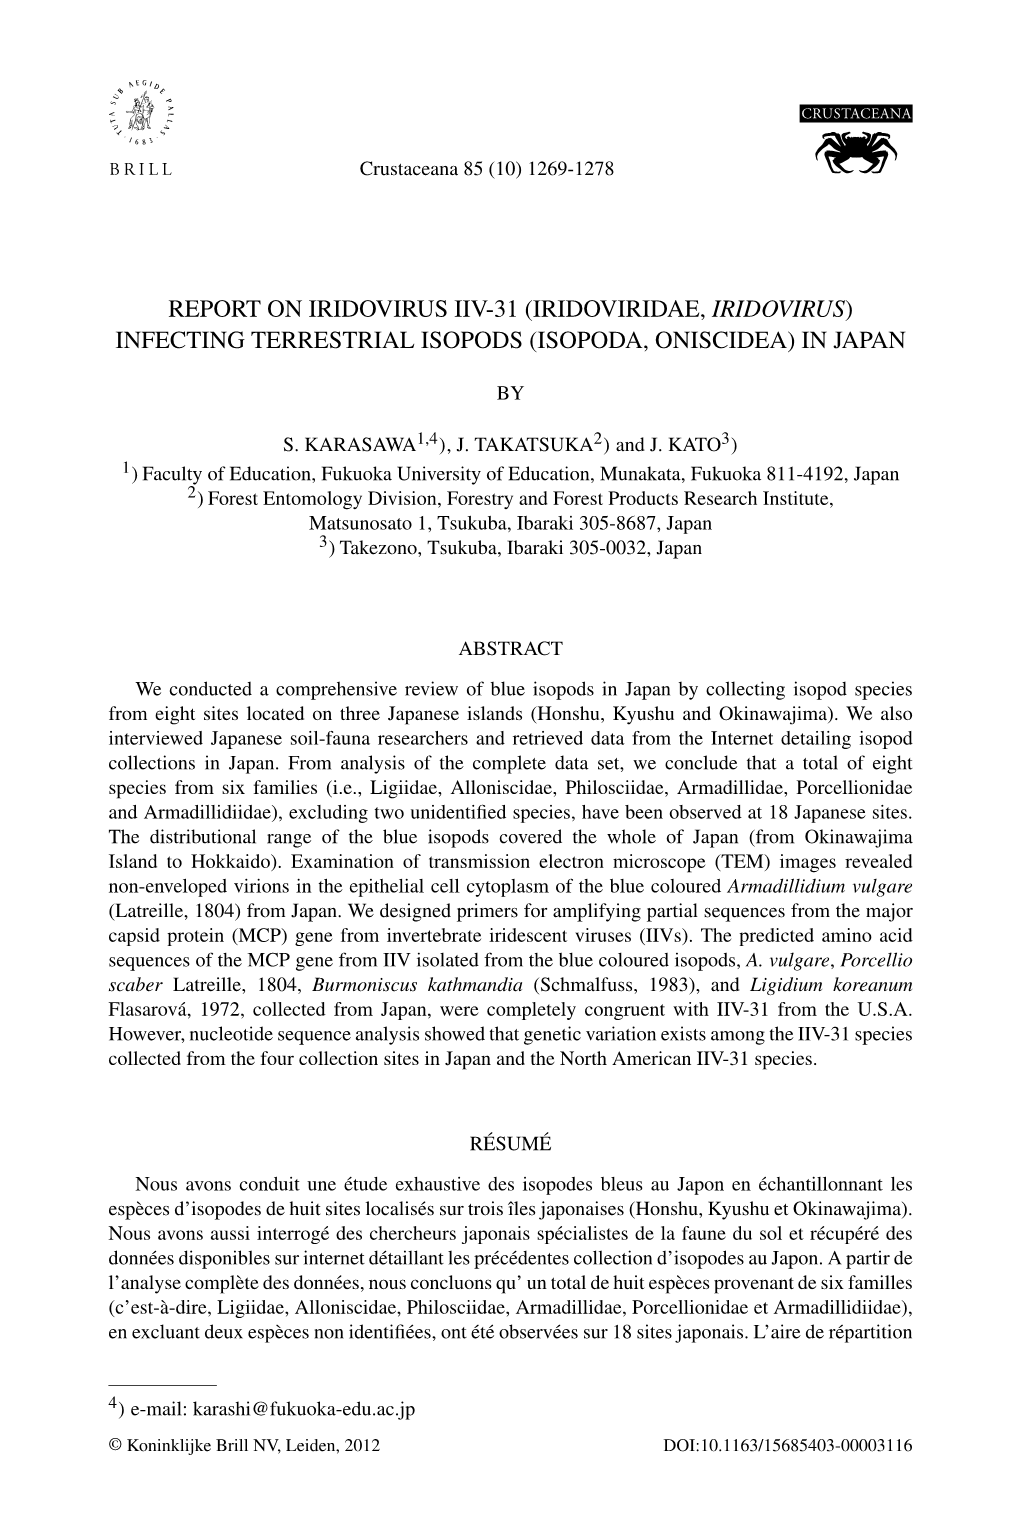 Report on Iridovirus Iiv-31 (Iridoviridae, Iridovirus) Infecting Terrestrial Isopods (Isopoda, Oniscidea) in Japan